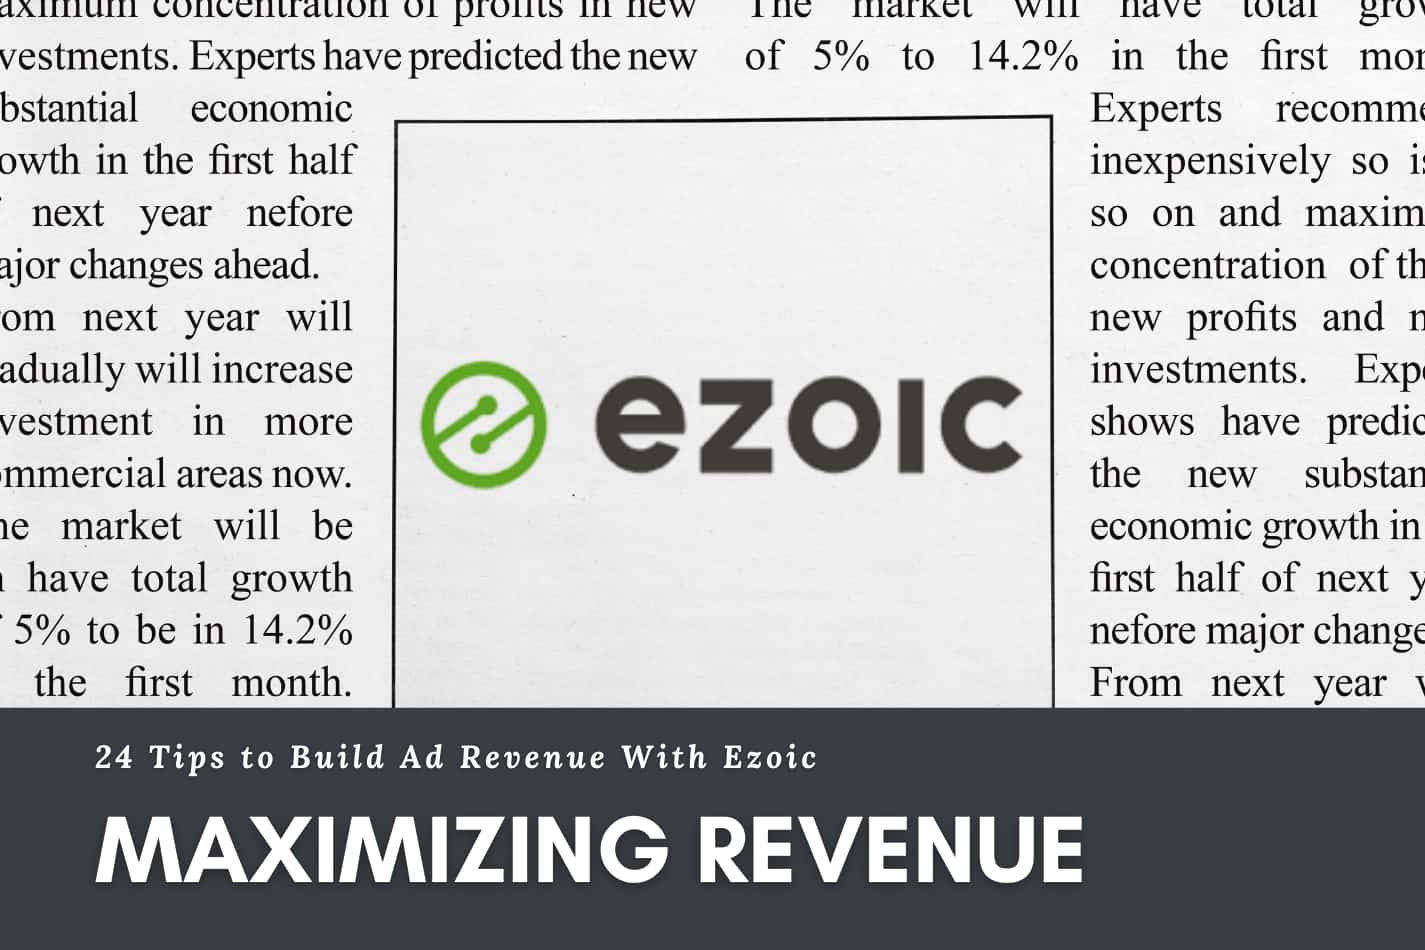 24 Ways to Maximize Ezoic Ad Revenue on Your Website